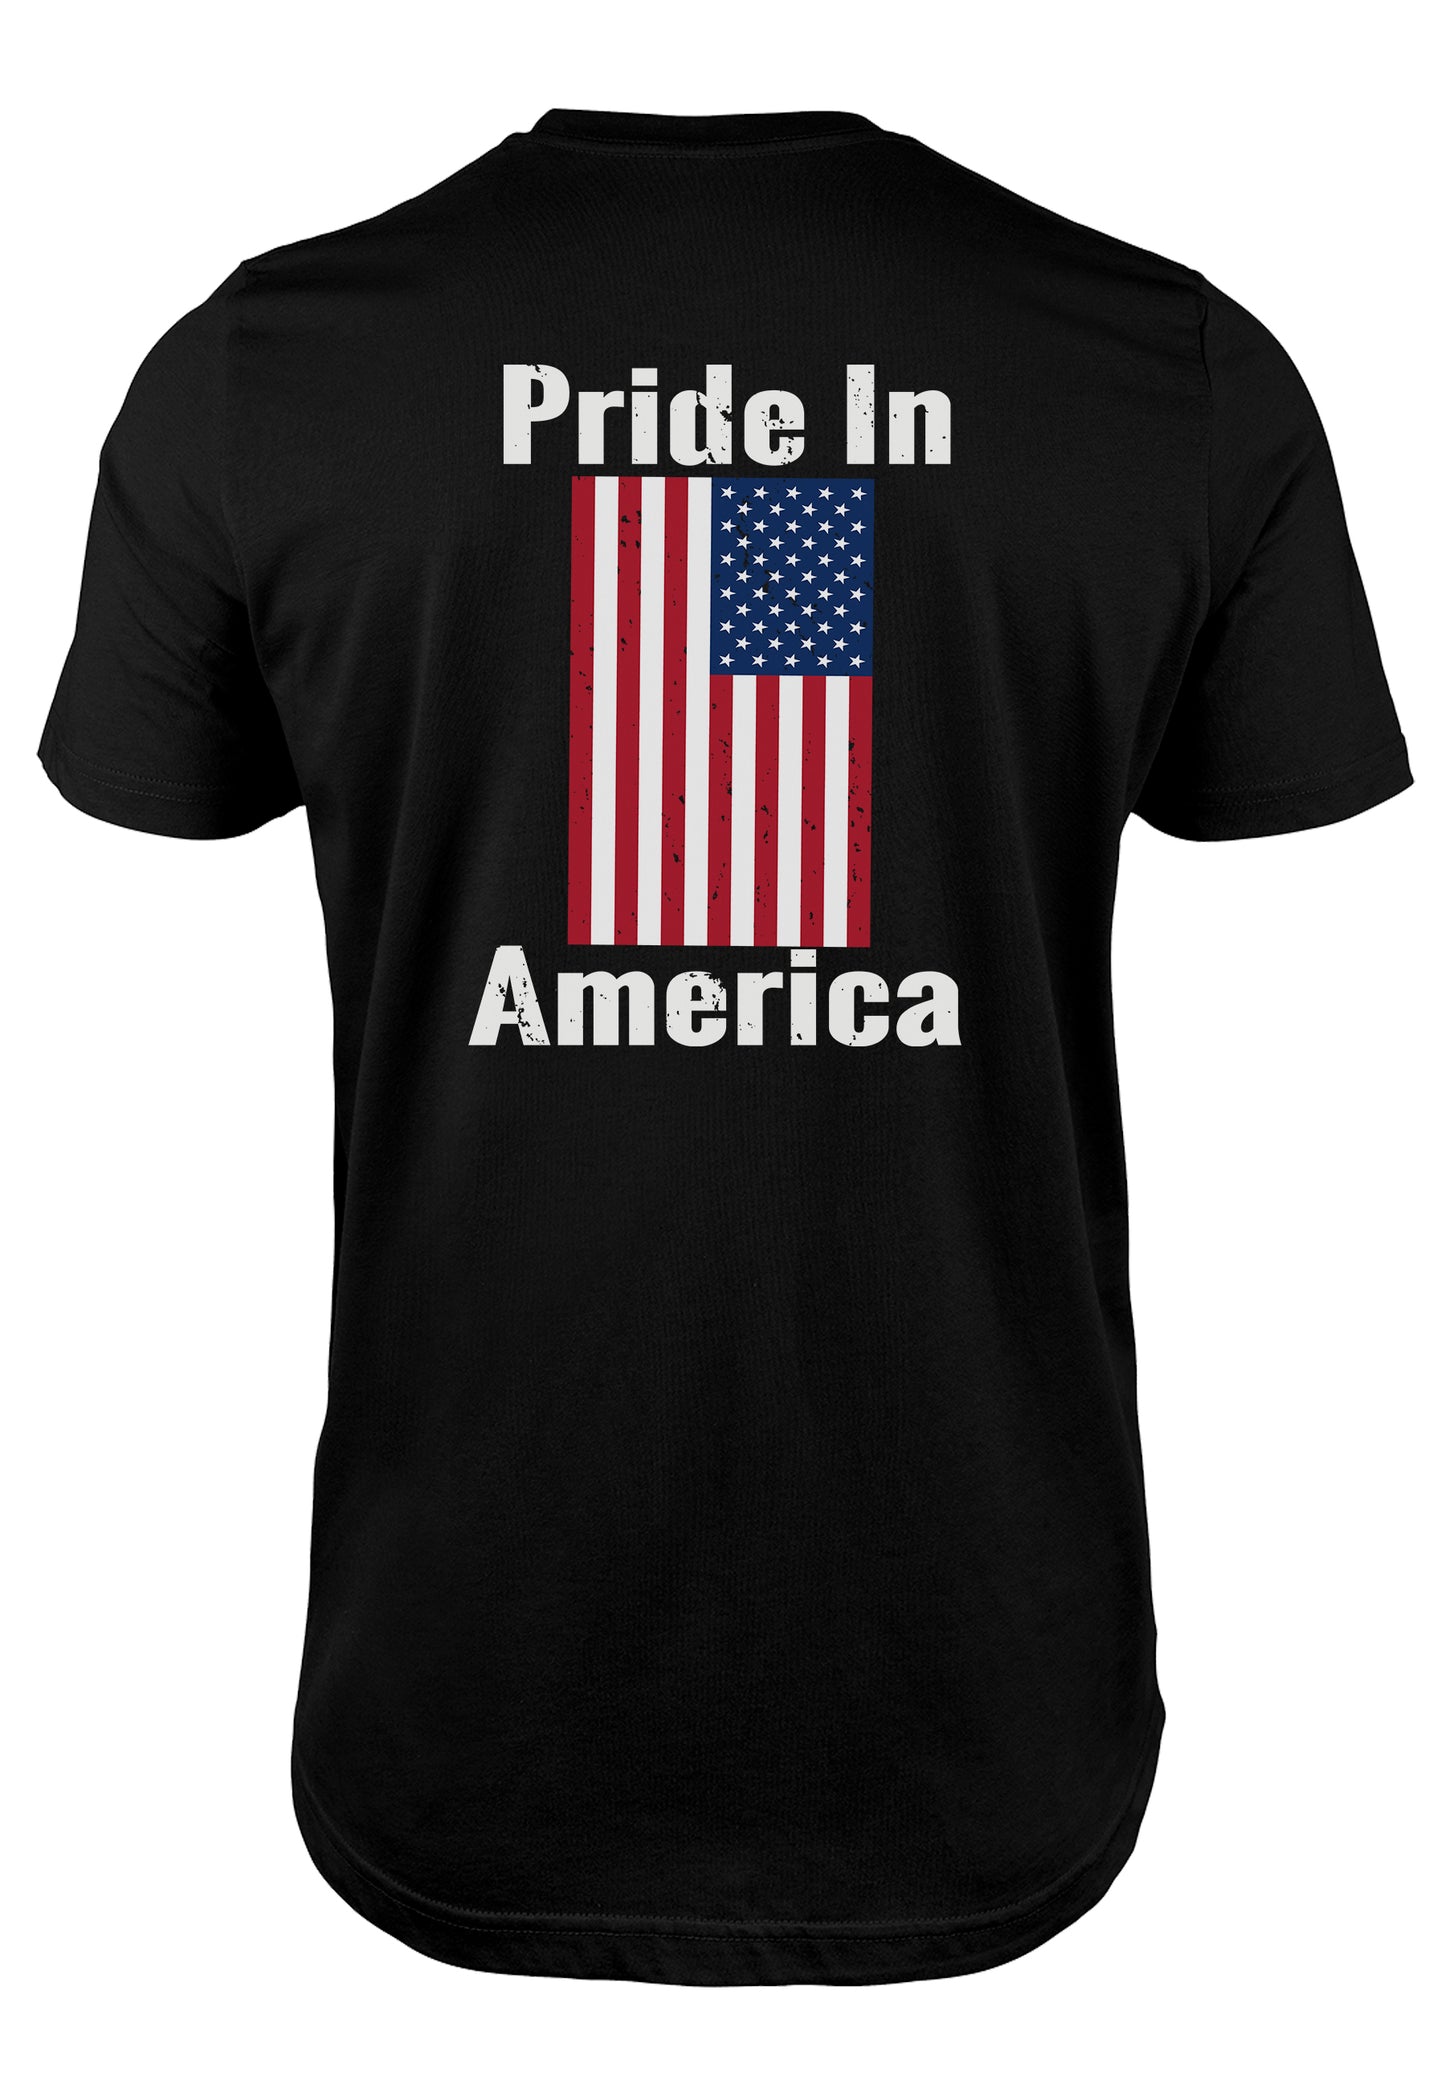 Pride in America t-shirt black